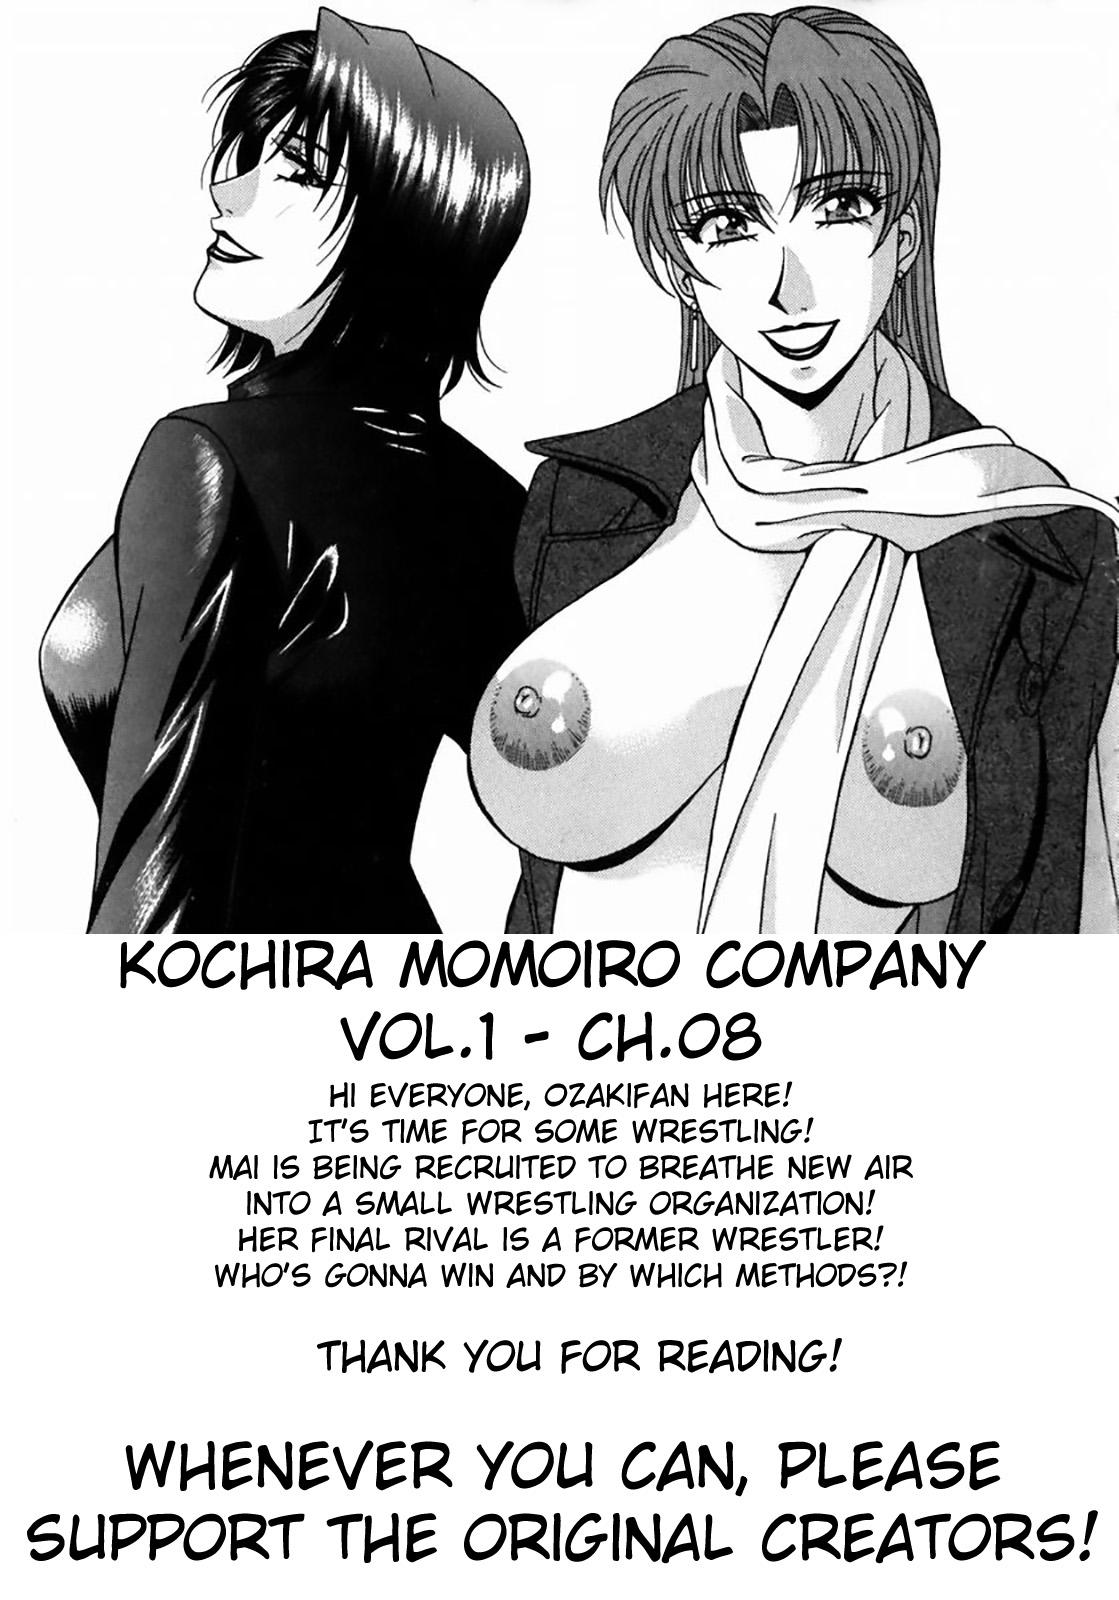 Style Kochira Momoiro Company Vol. 1 Ch. 1-8 Jerk - Page 174